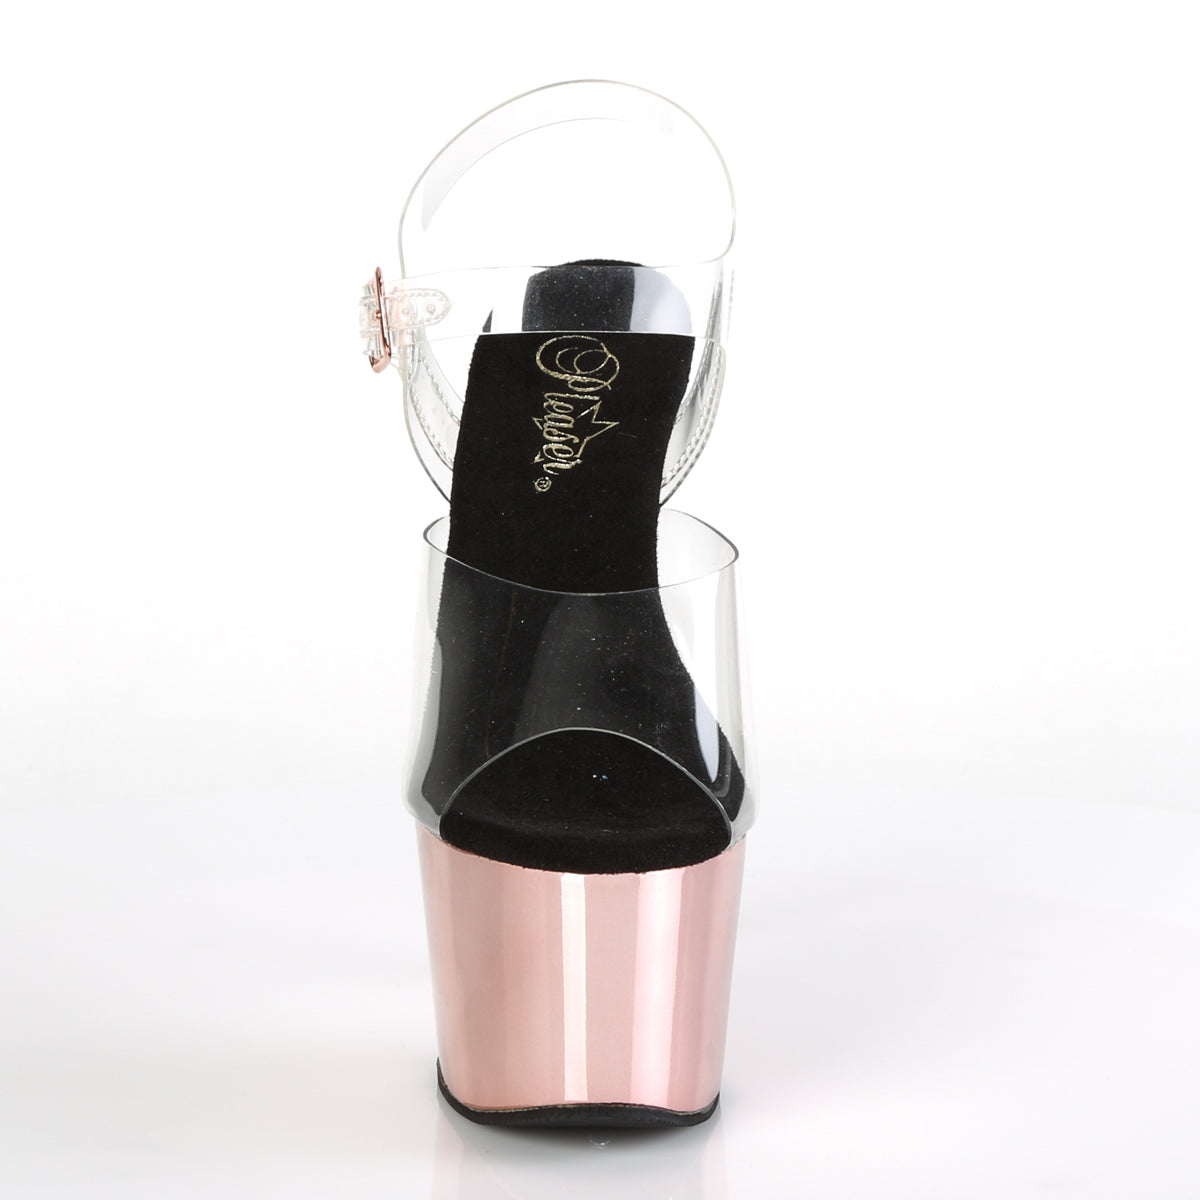 ADORE-708 Pleaser Clear/Rose Gold Chrome Platform Shoes [Exotic Dance Shoes]